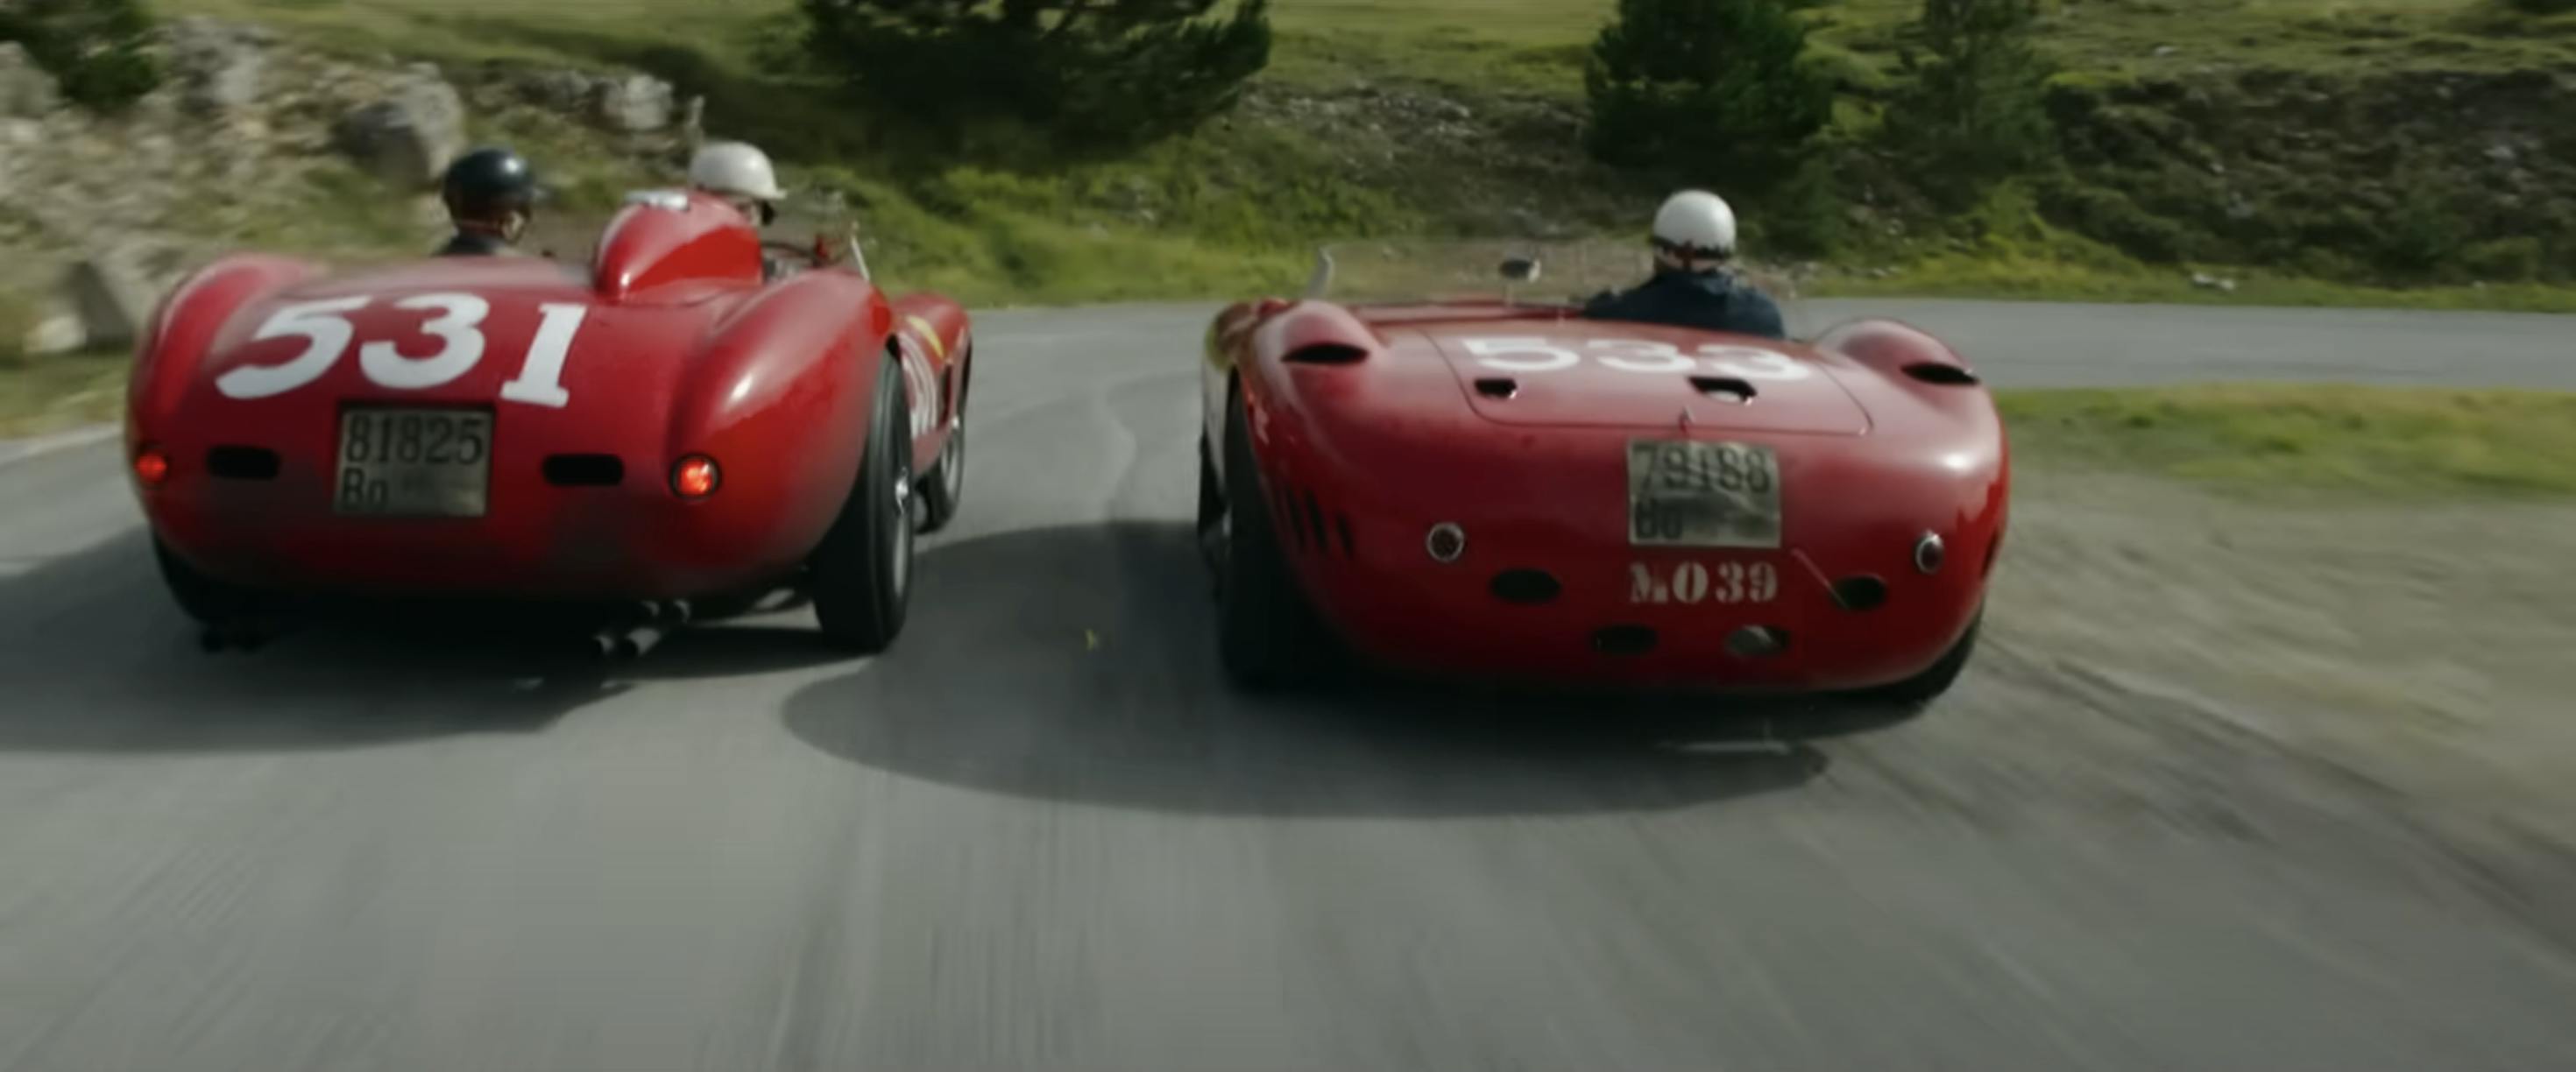 Ferrari film racing action still turn in pass